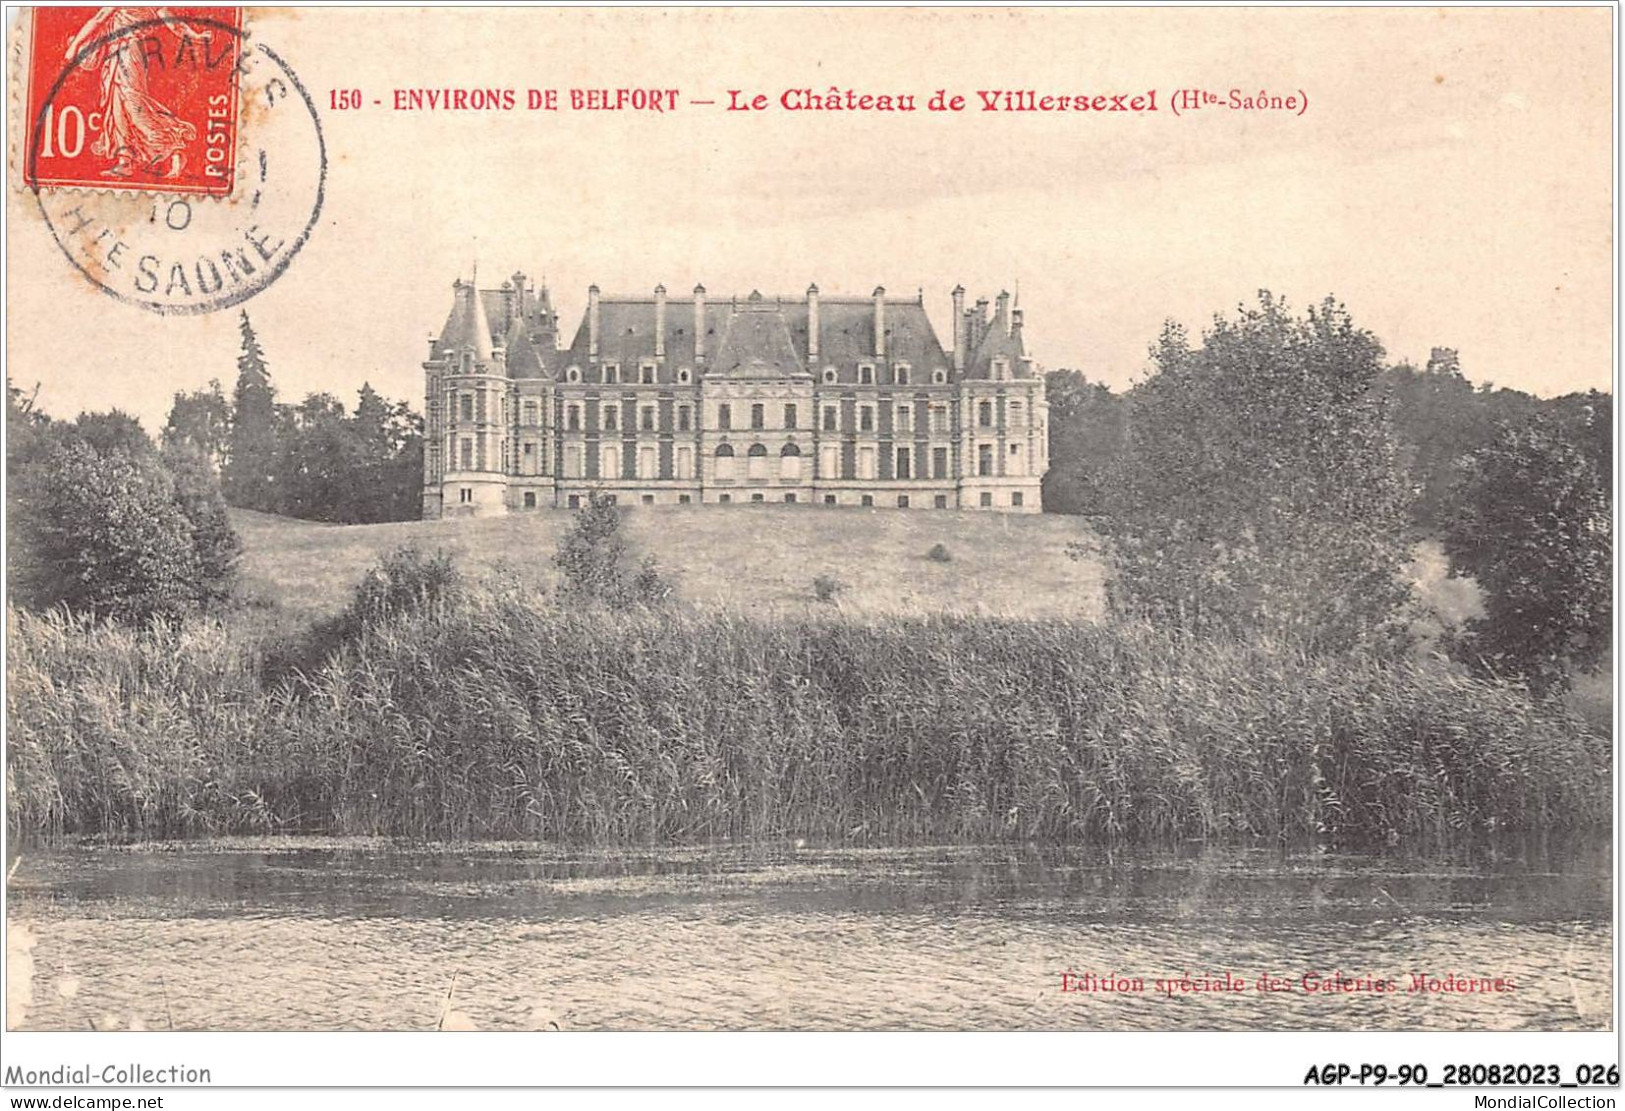 AGPP9-0737-90 - BELFORT - Hte-Saone - Le Chateau De Villersexel  - Belfort - Stadt